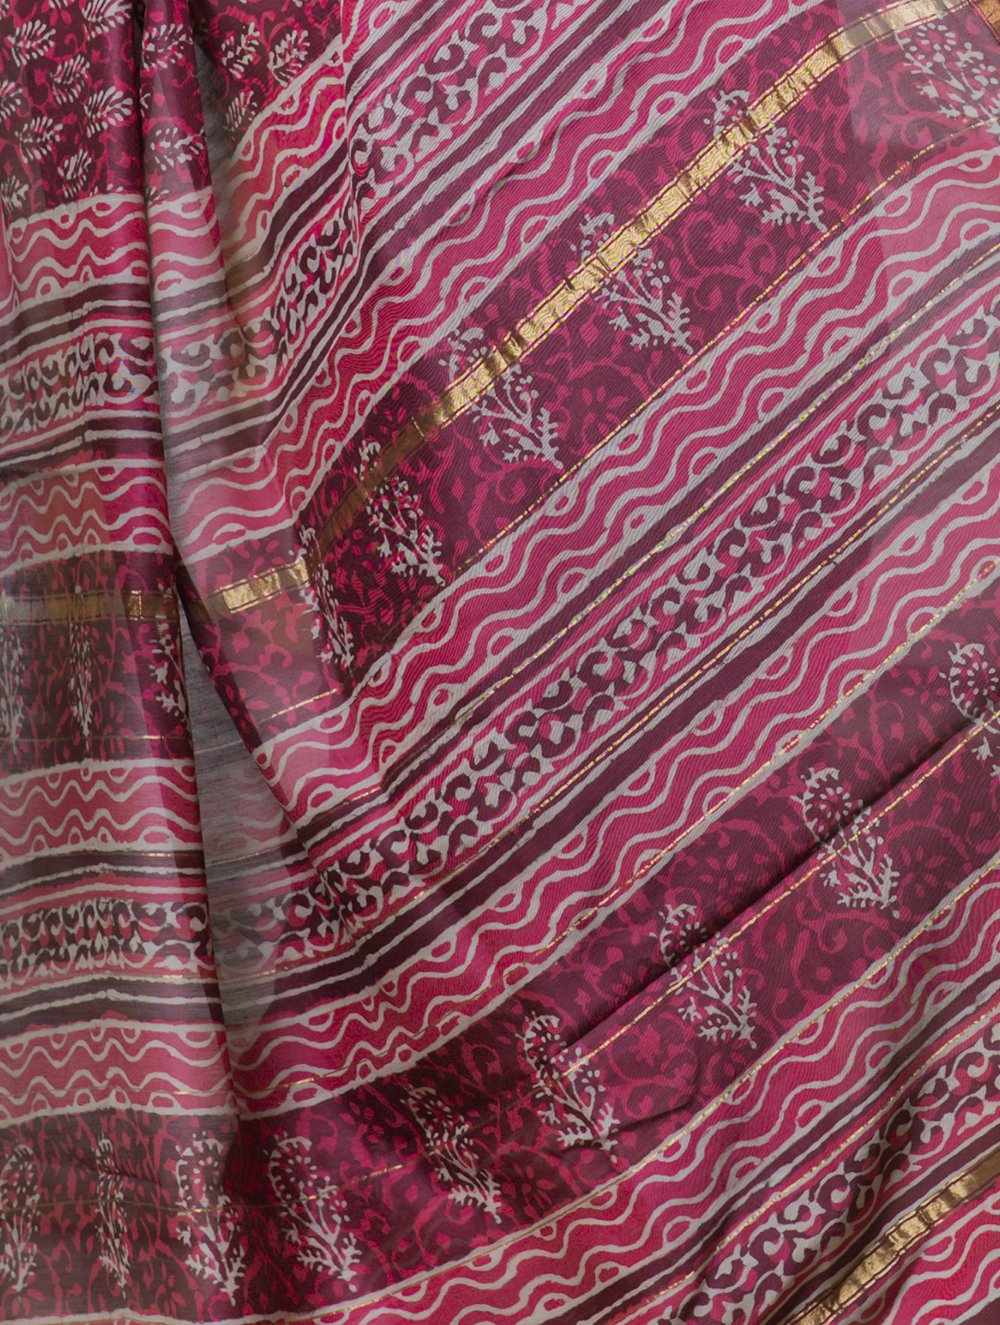 Load image into Gallery viewer, Bagru Block Printed Chanderi Saree - Pink Leaf (With Blouse Piece)